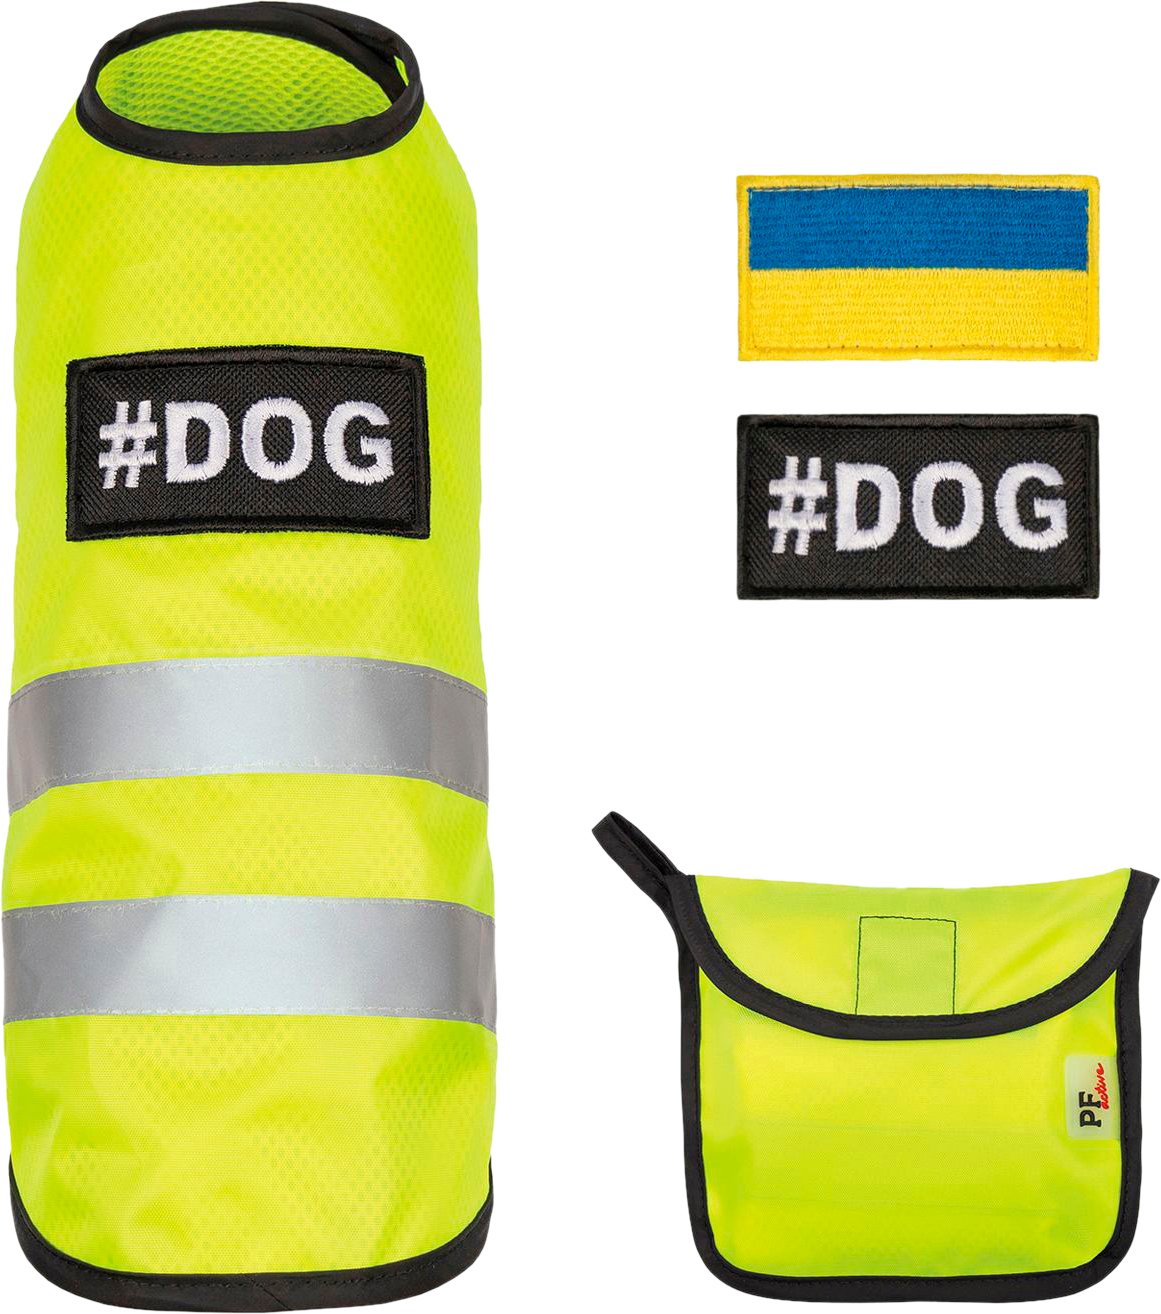 Жилет для собак Pet Fashion Warm Yellow Vest размер XS желтый фото 3